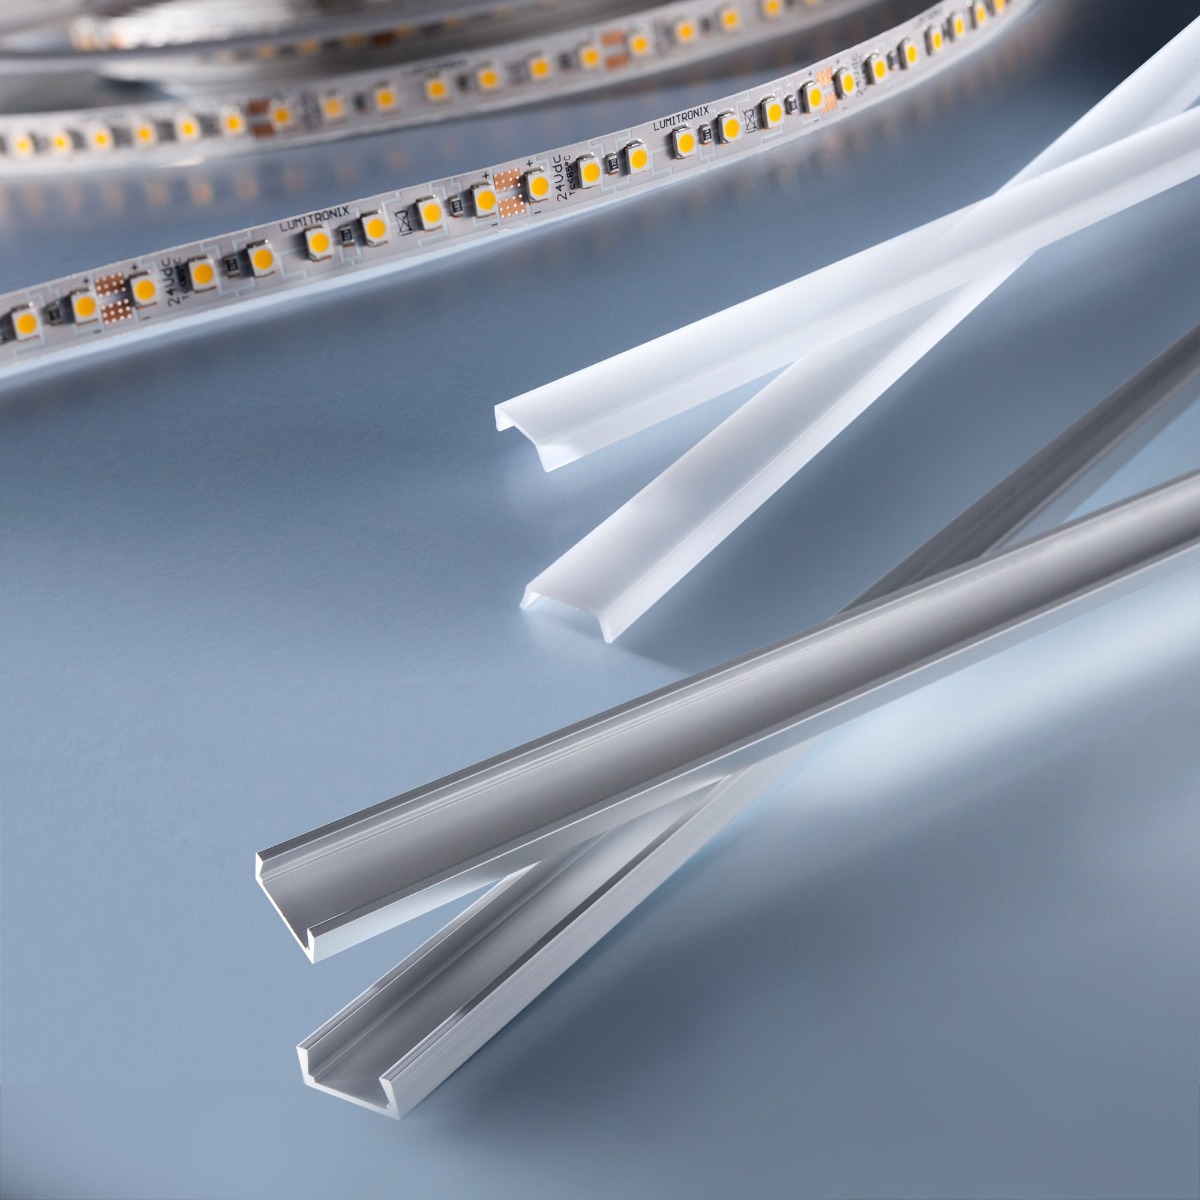 Starter-Set Lumiflex70 Nichia LED Strip warm white 2700K 2440lm 24V 140 LEDs 3.28ft  incl. Surface Profile and Cover